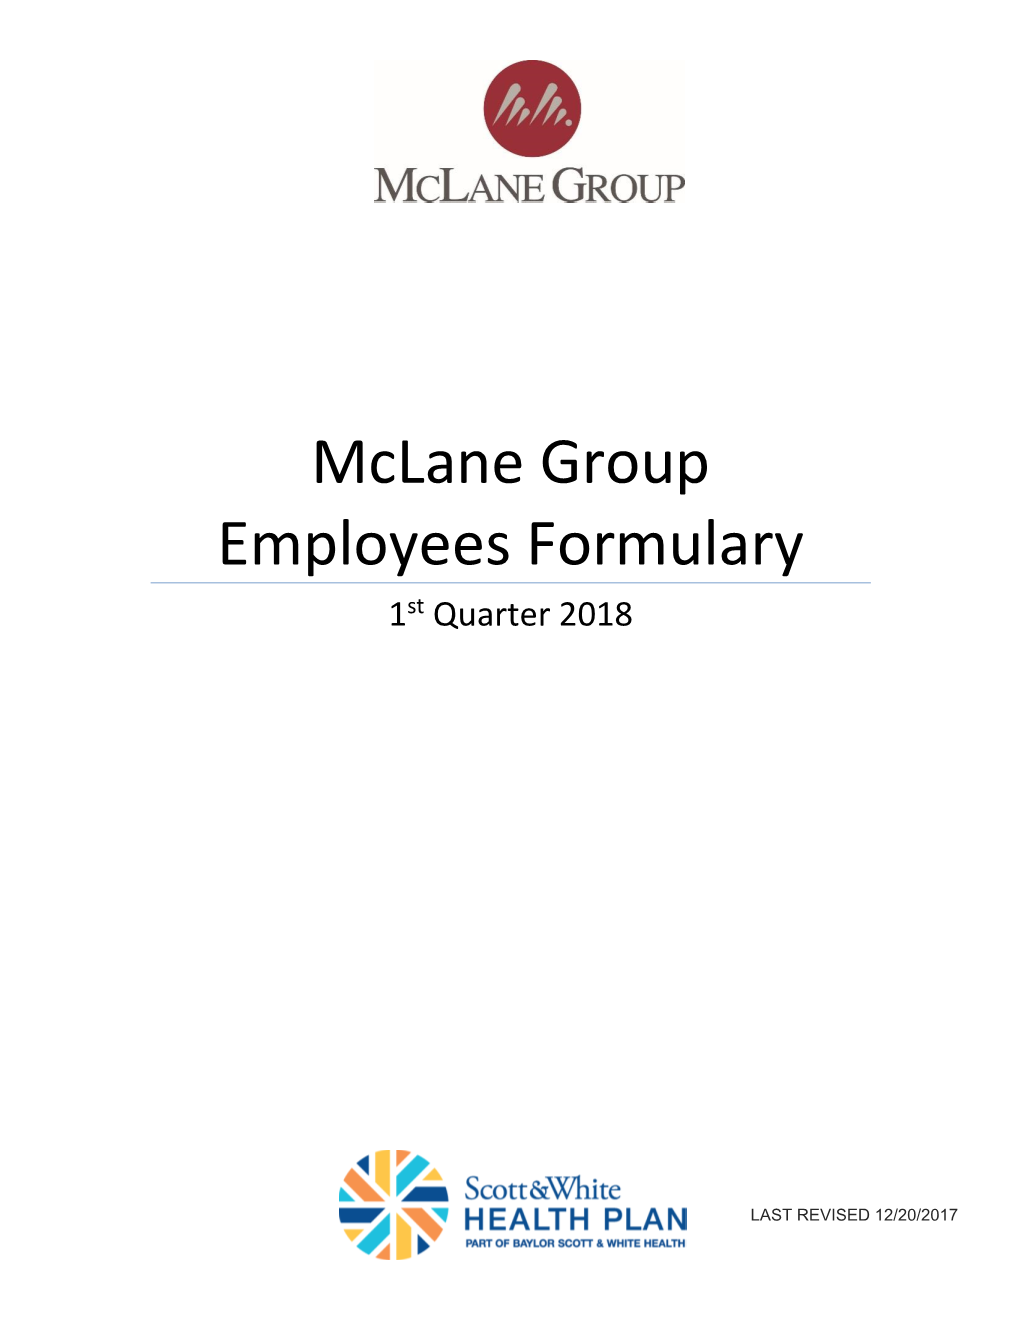 Mclane Group Employees Formulary 1St Quarter 2018